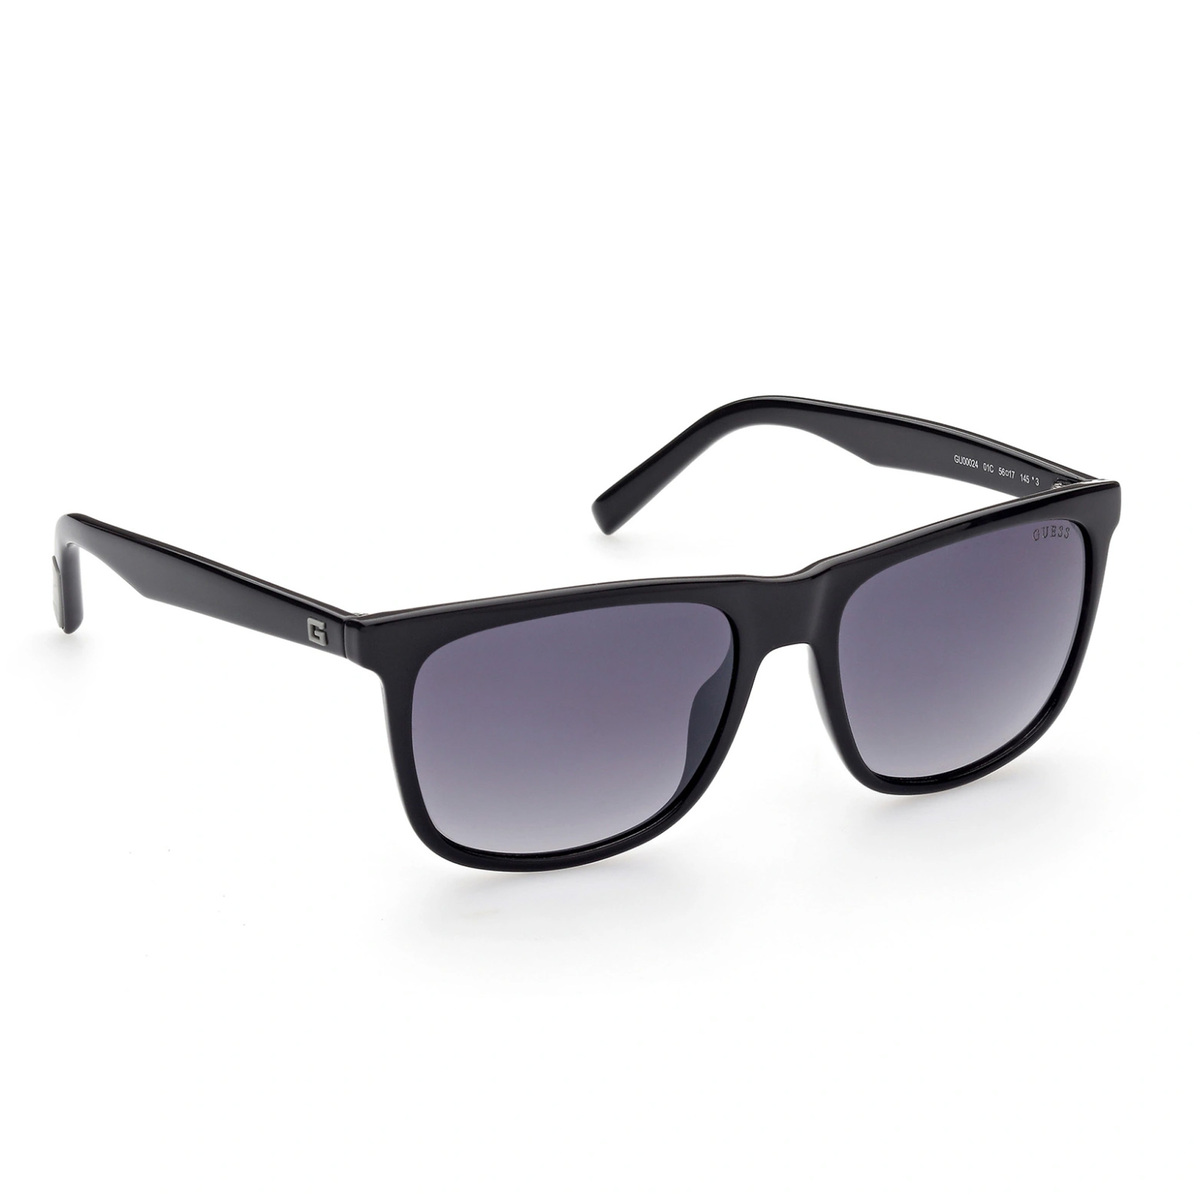 Guess Men's Square Sunglasses, Smoke Mirror, GU00024 01C